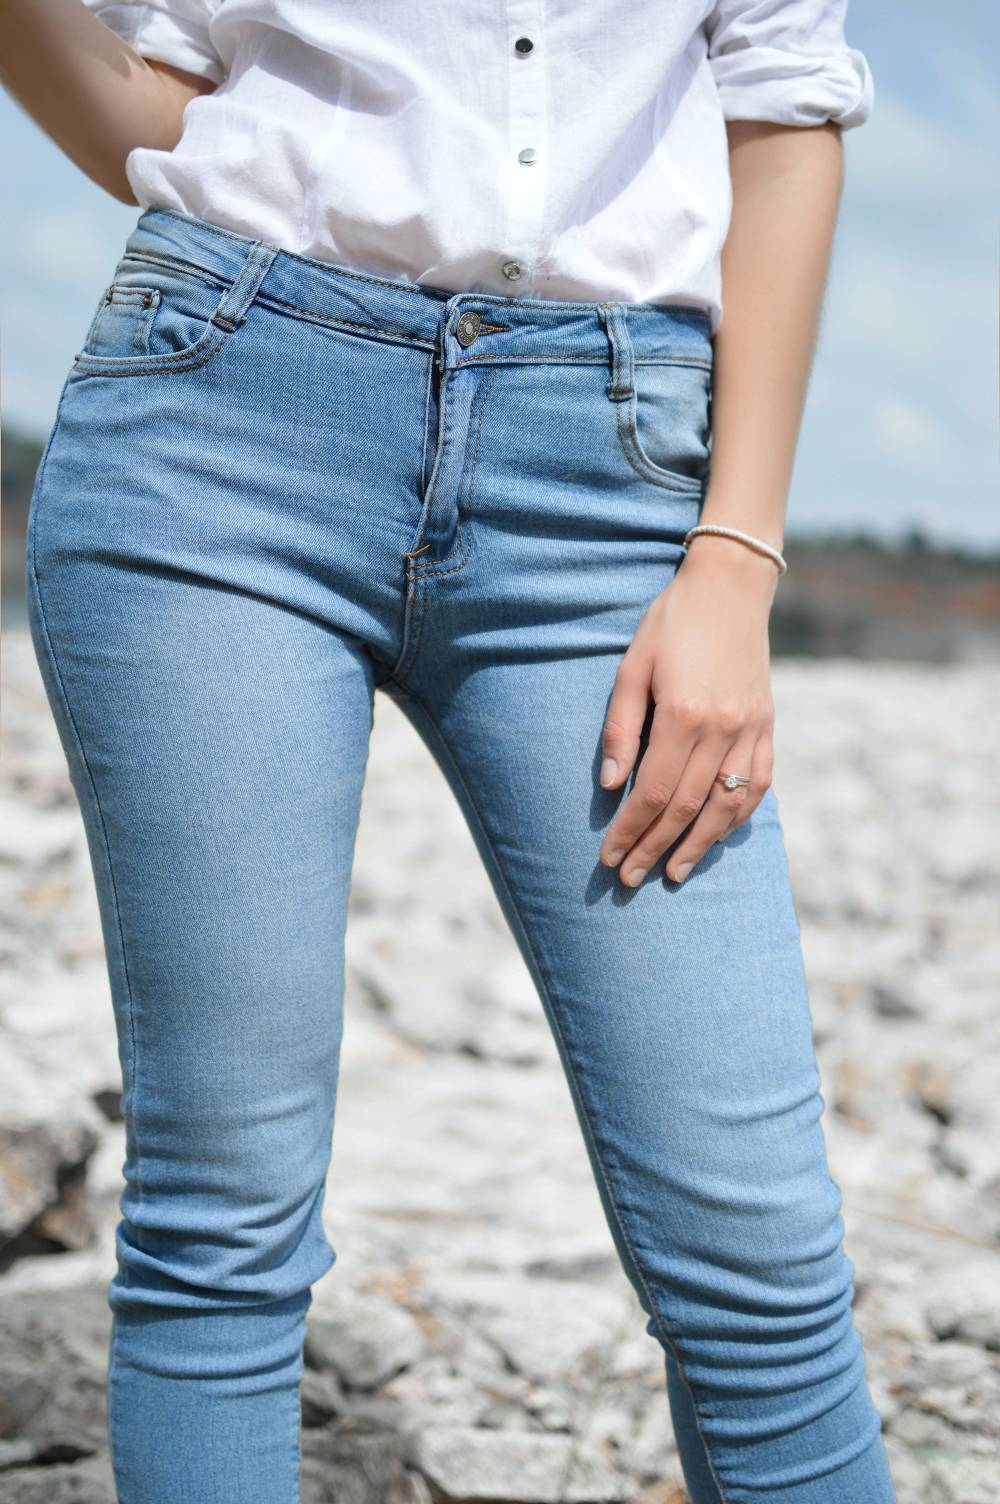 skinny jean fashion style